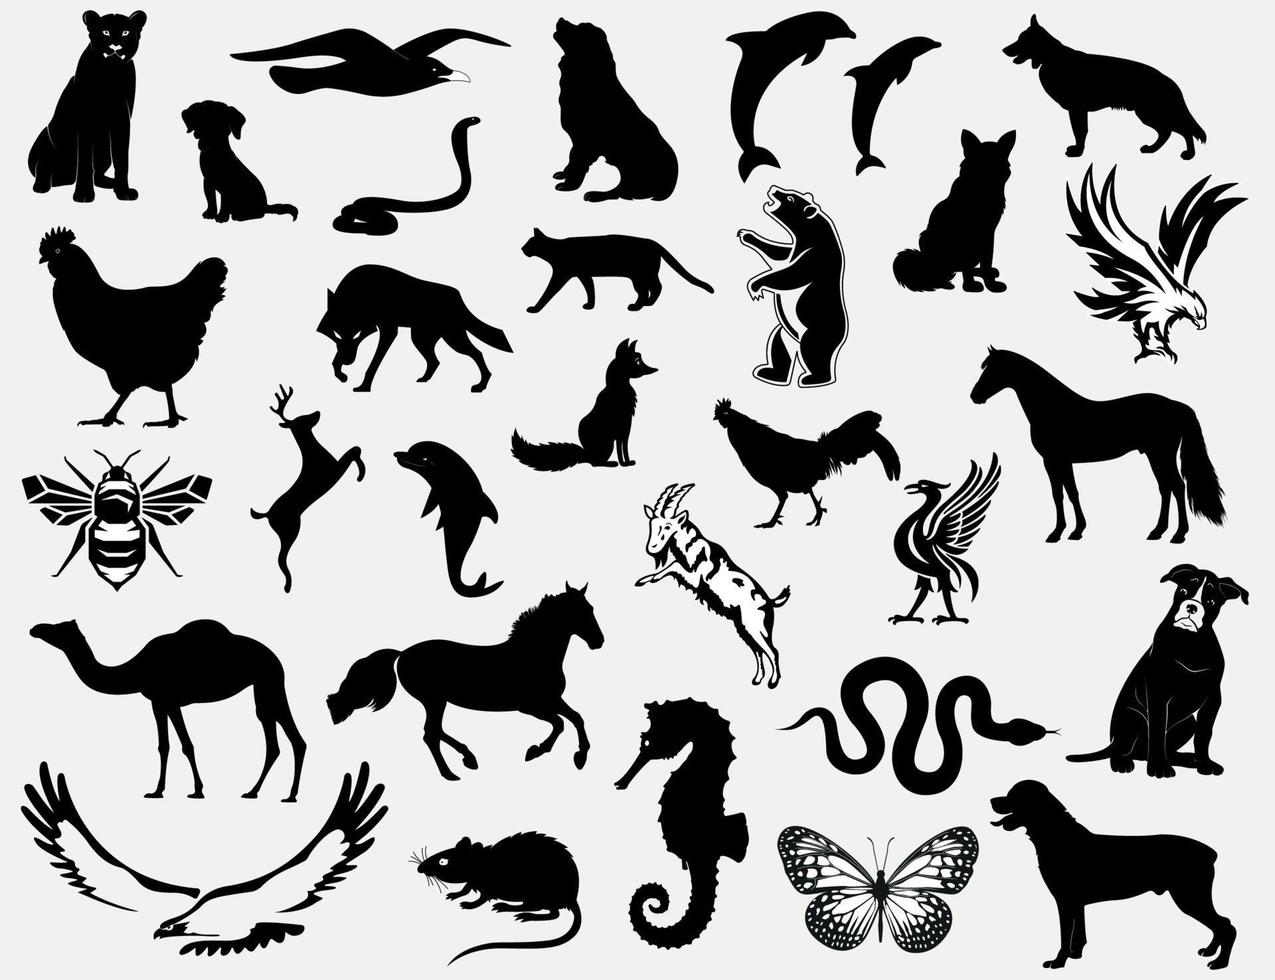 satz tiersilhouetten, hunde, säugetiere, vögel, insekten, reptilien und meerestiere schwarz-weiße tierillustrationen vektor